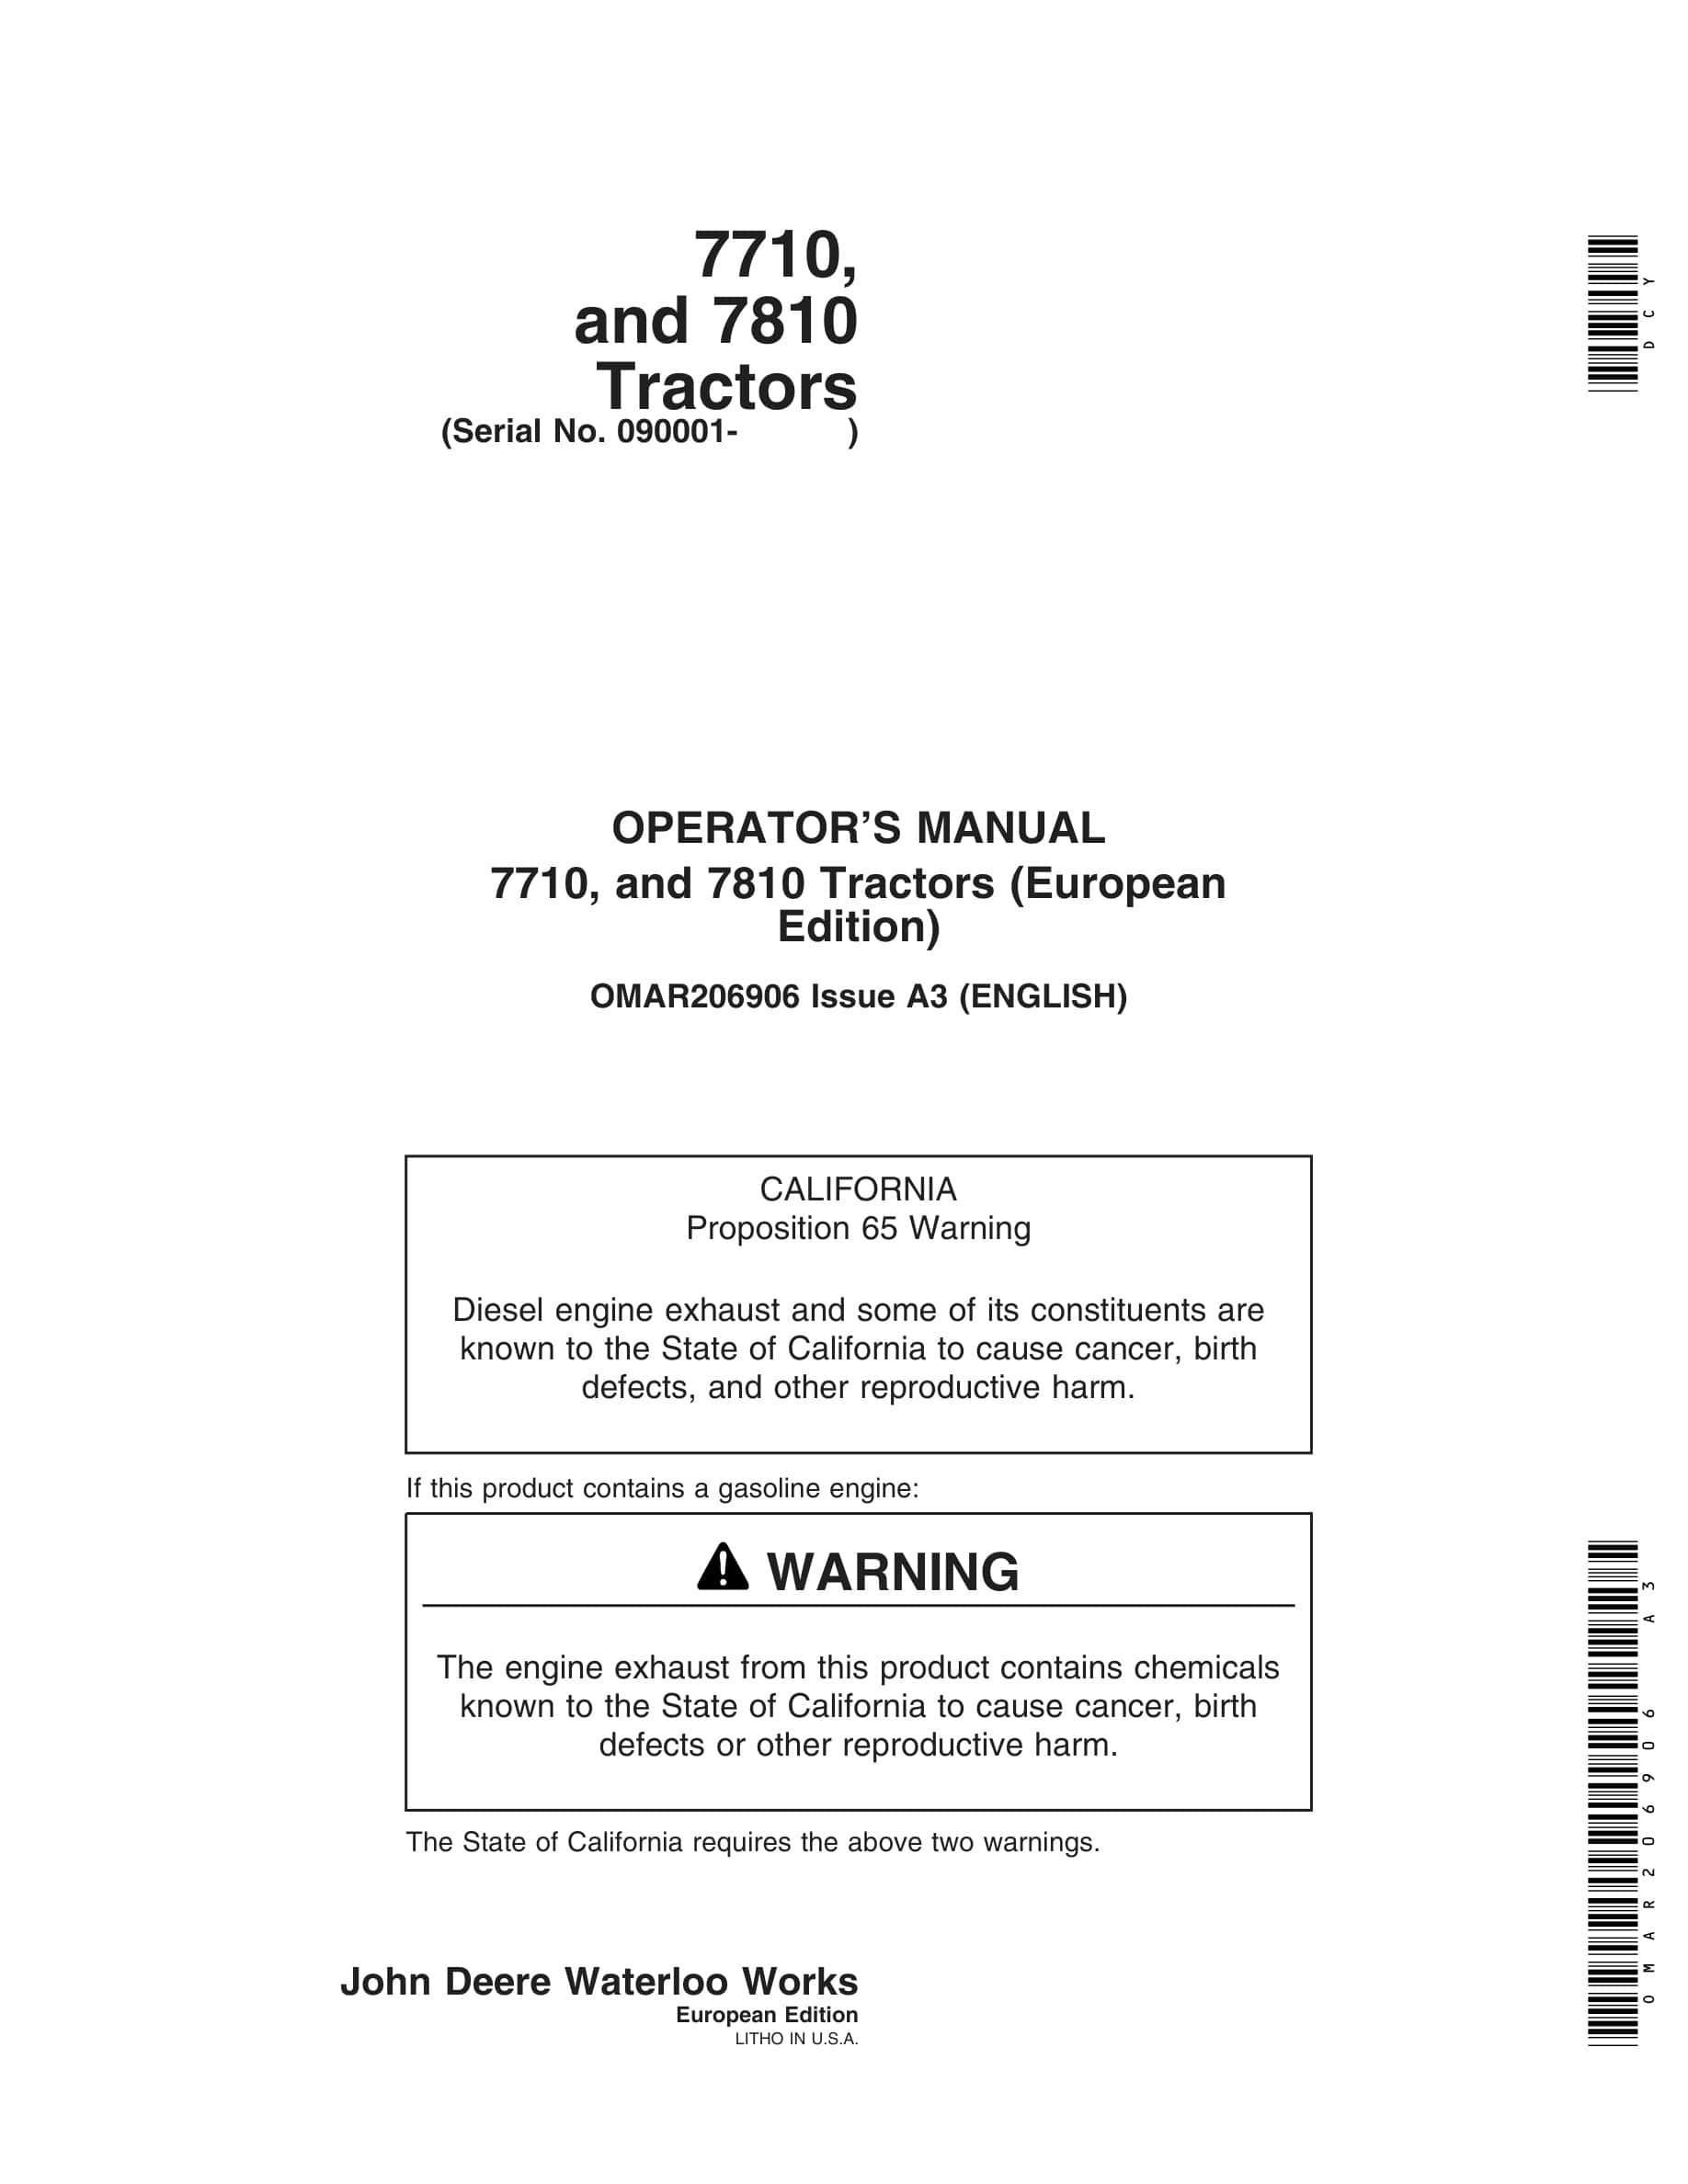 John Deere 7710, And 7810 Tractors Operator Manuals OMAR206906-1